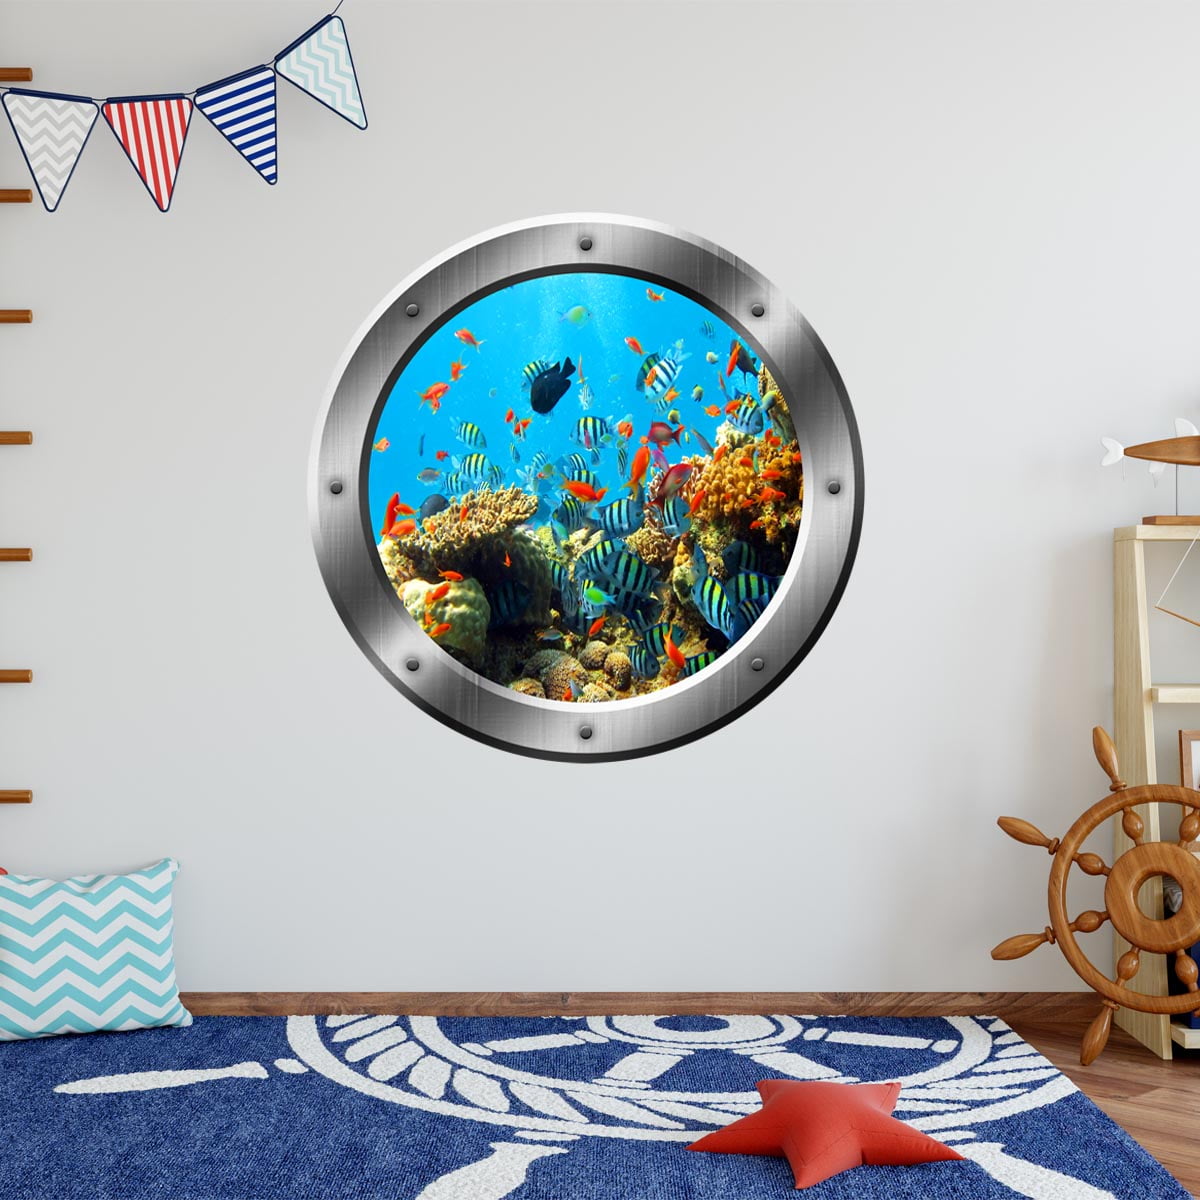 3D Porthole Underwater Animal Decal Vinyl Poster Wall Sticker Bathroom Sea Life 